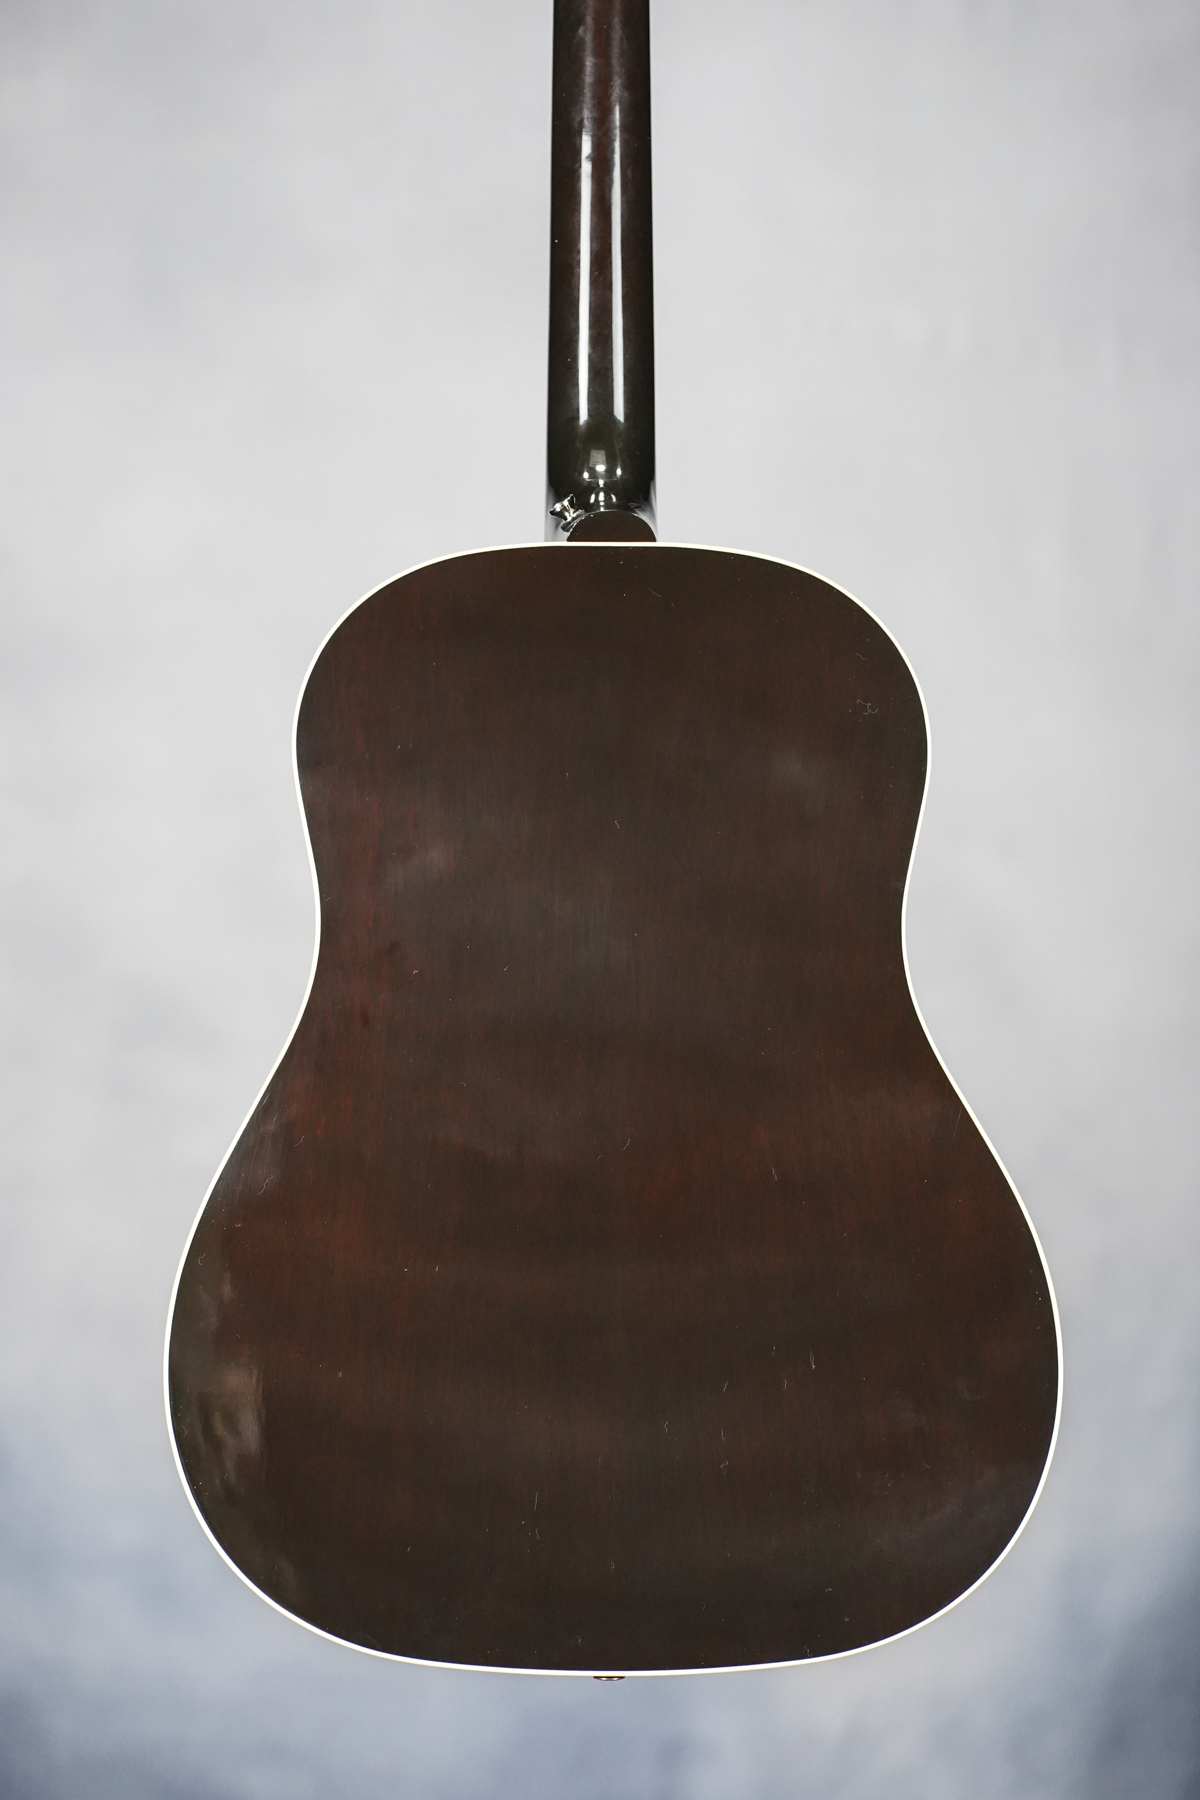 Gibson Acoustic J-45 Standard, Vintage Sunburst